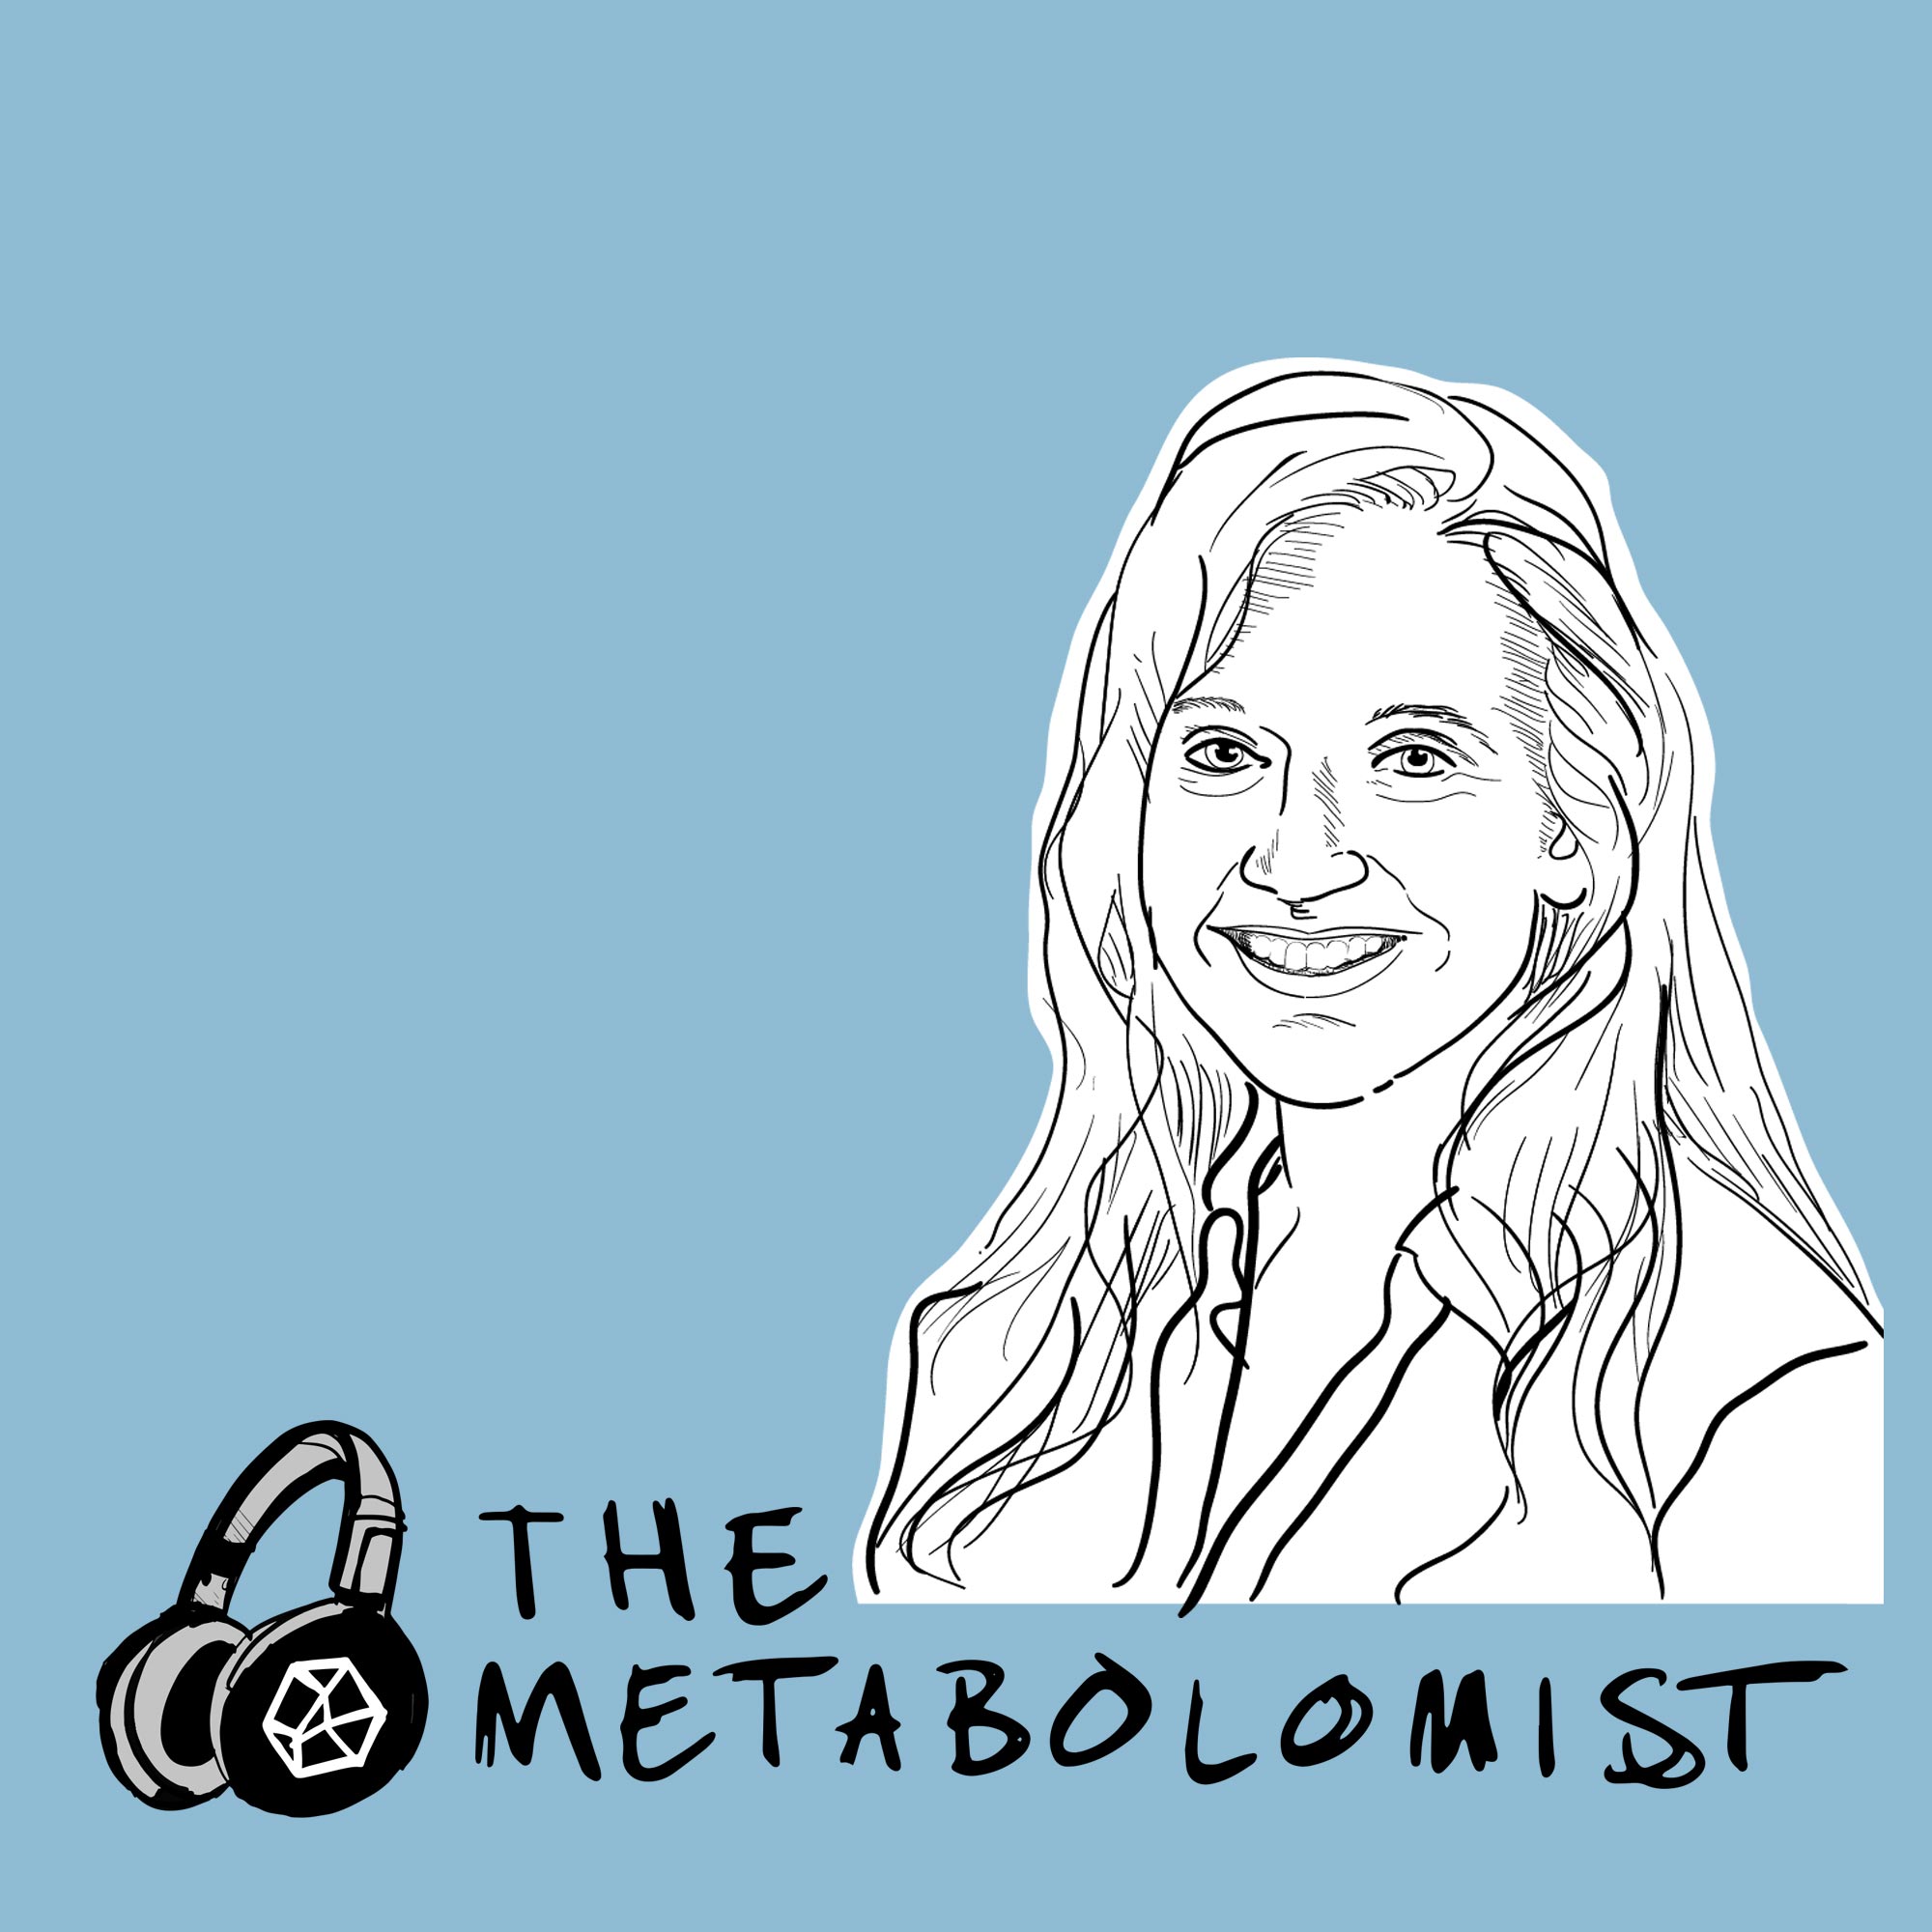 The Metabolomist - Rachel Kelly